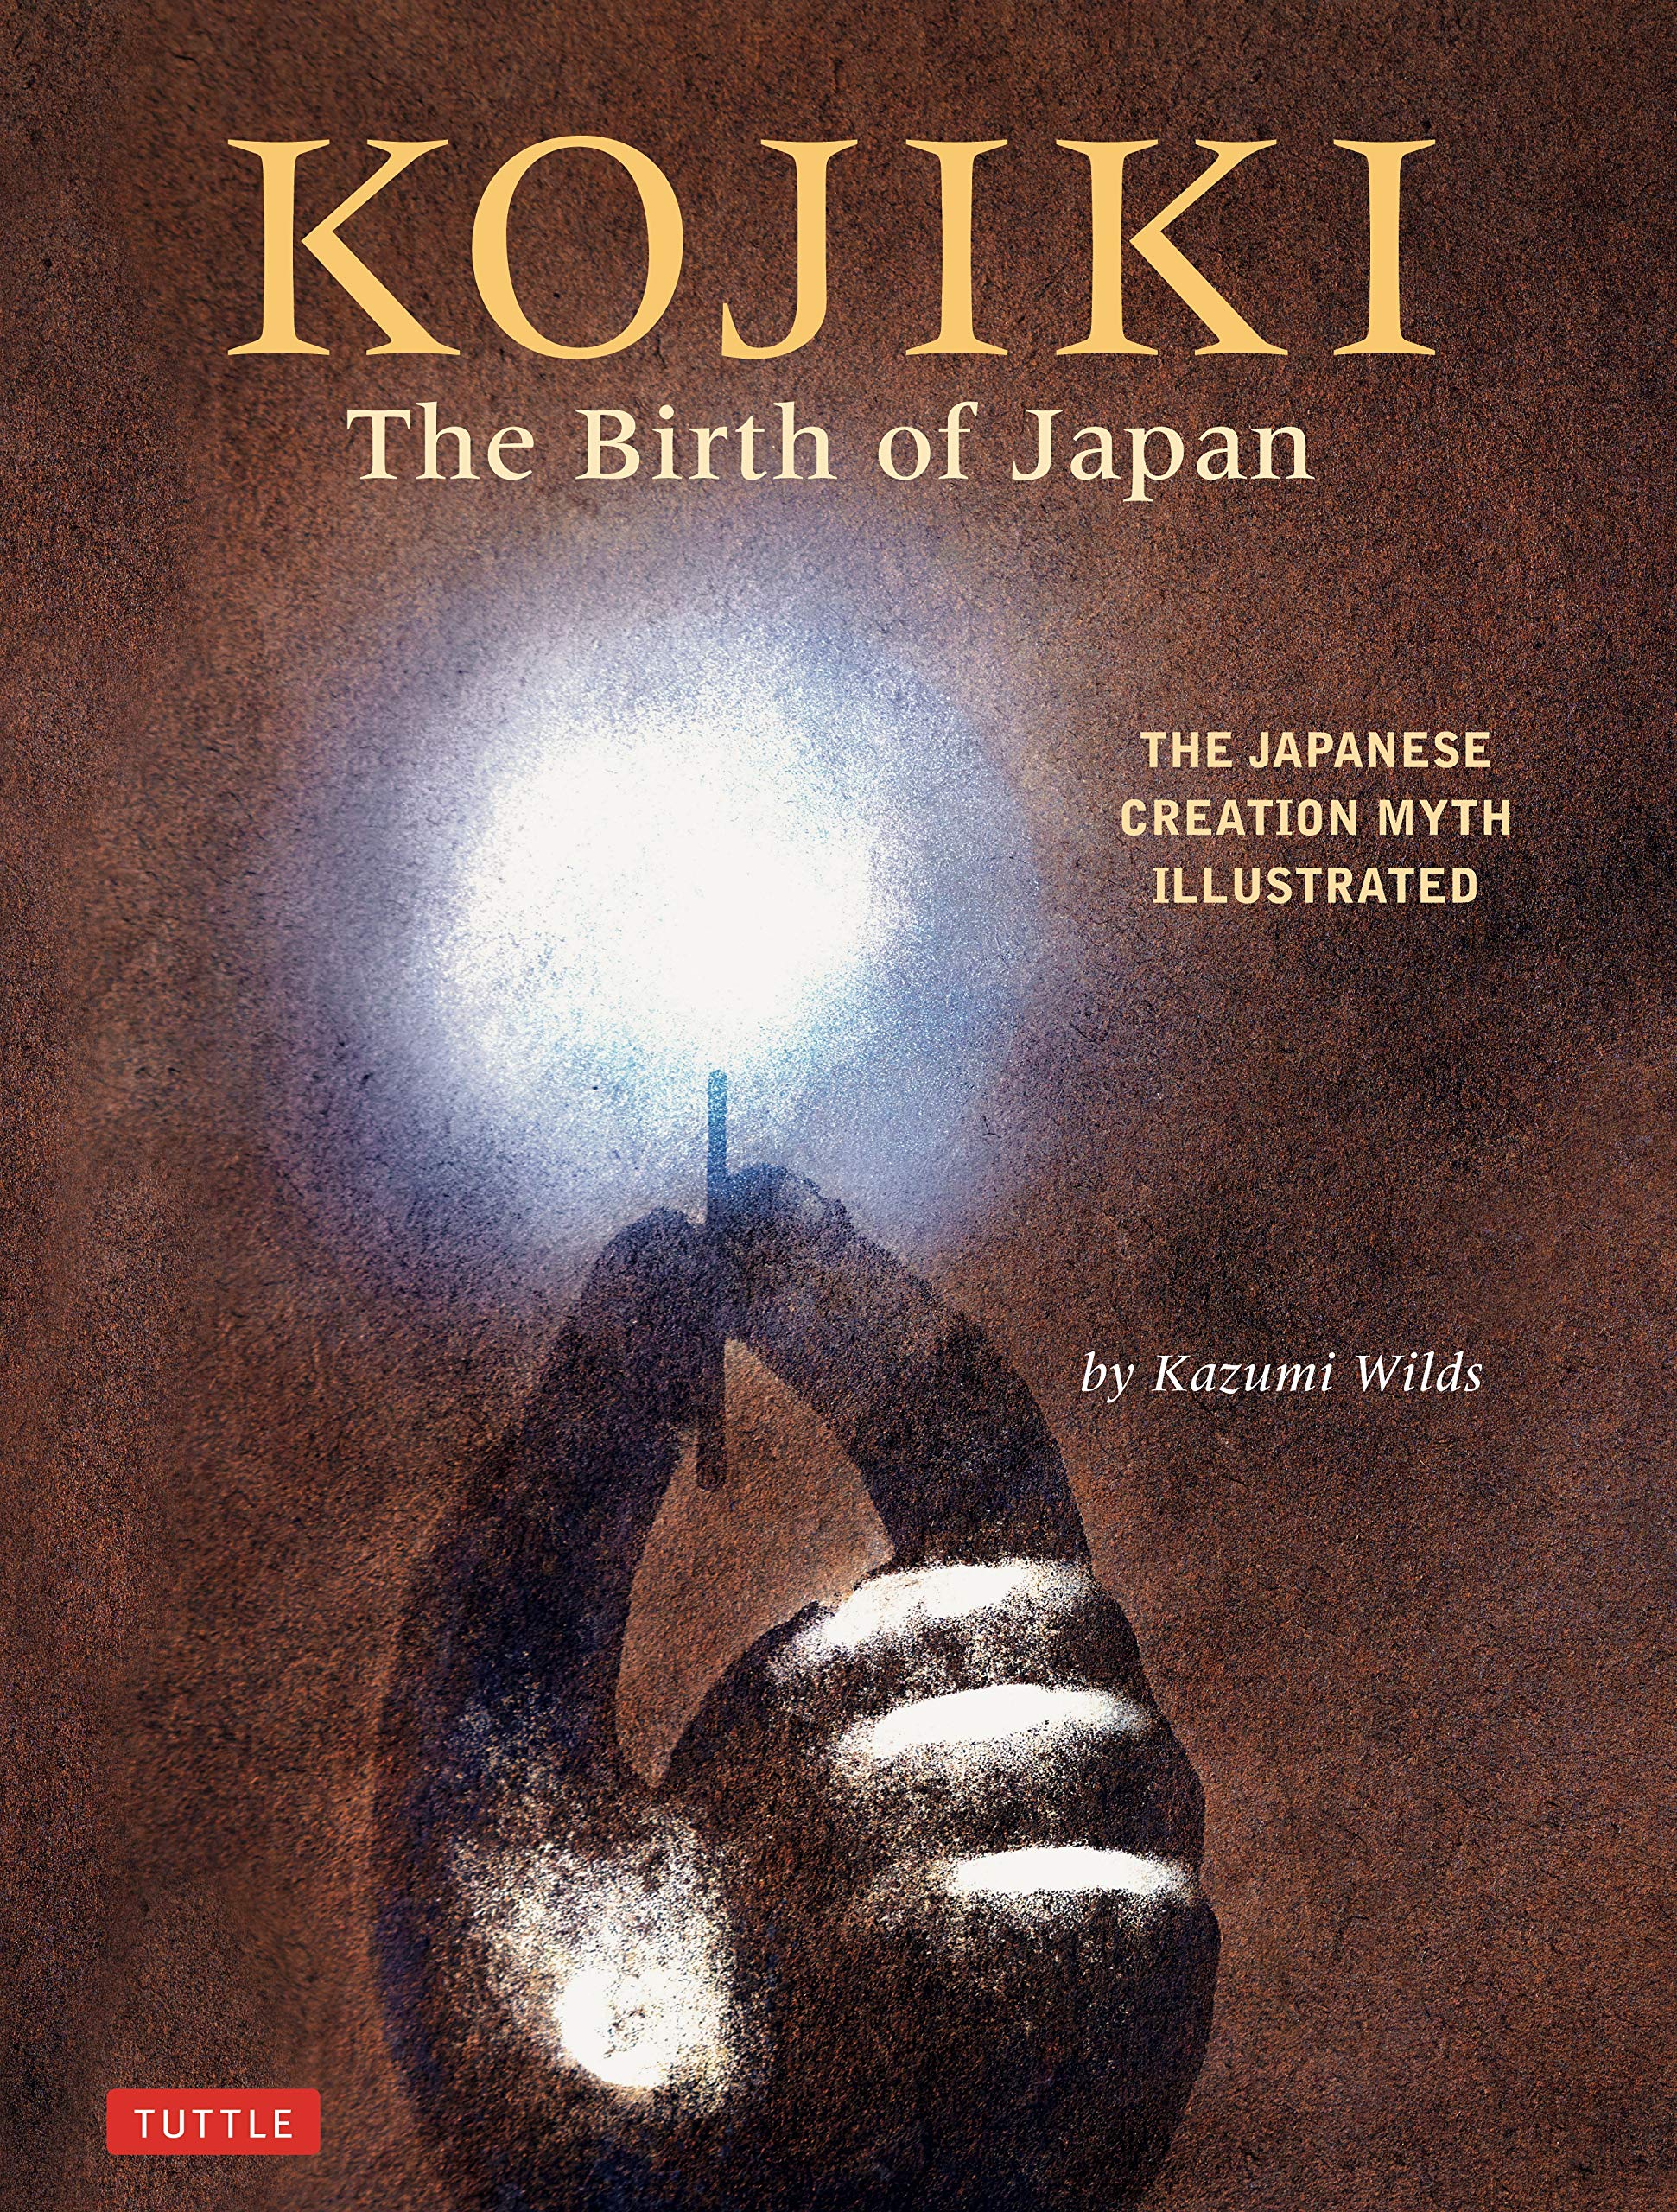 Kojiki: The Birth of Japan | Kazumi Wilds image2